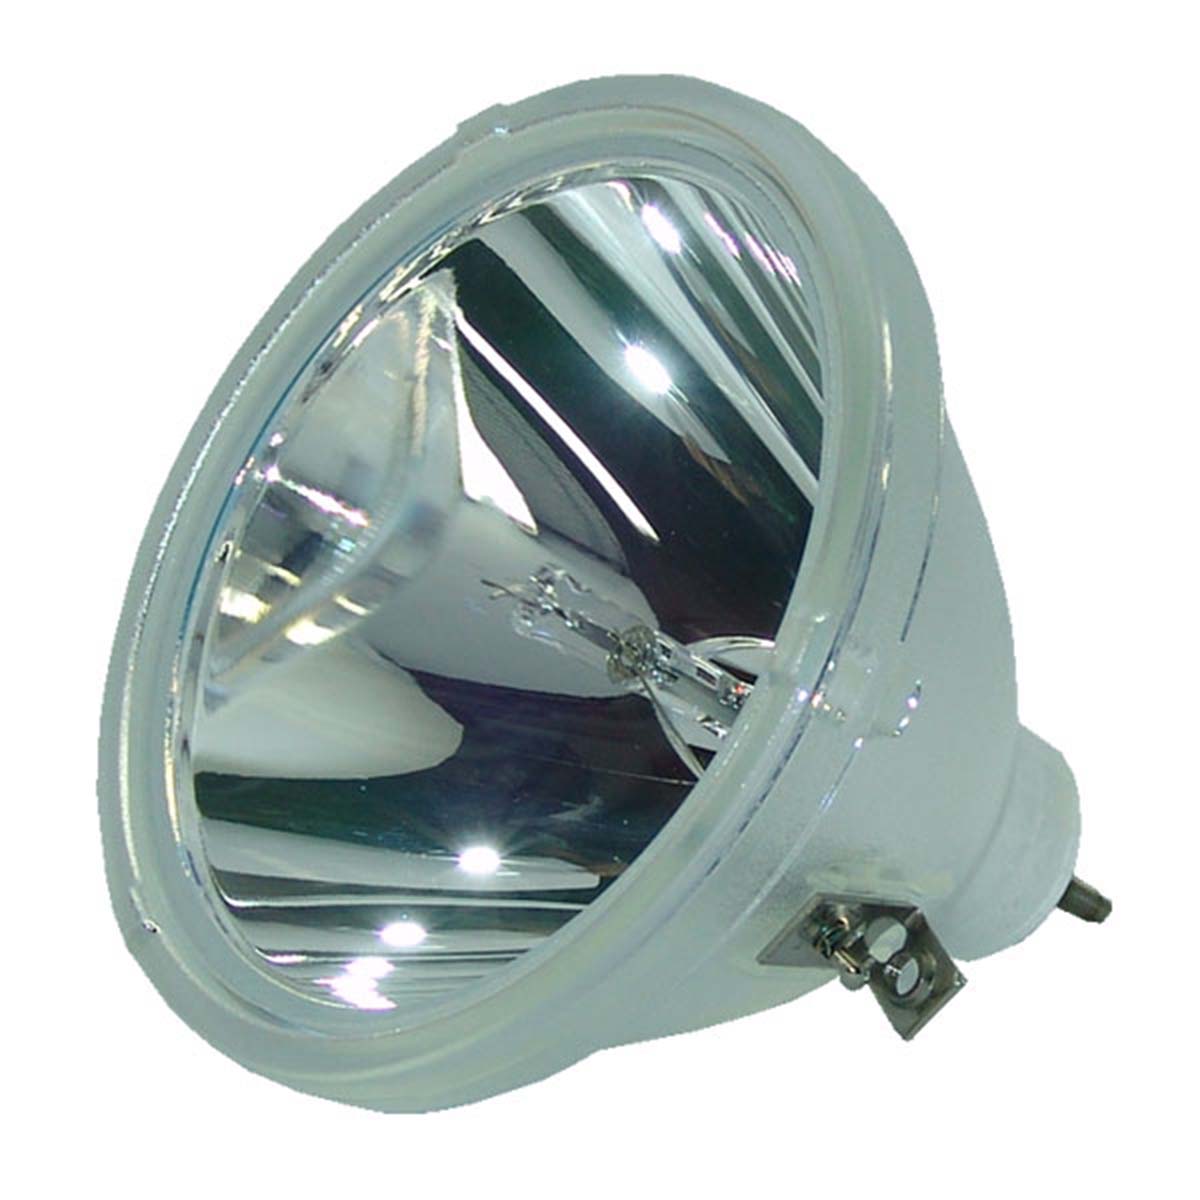 Philips LCA3105 Osram Projector Bare Lamp